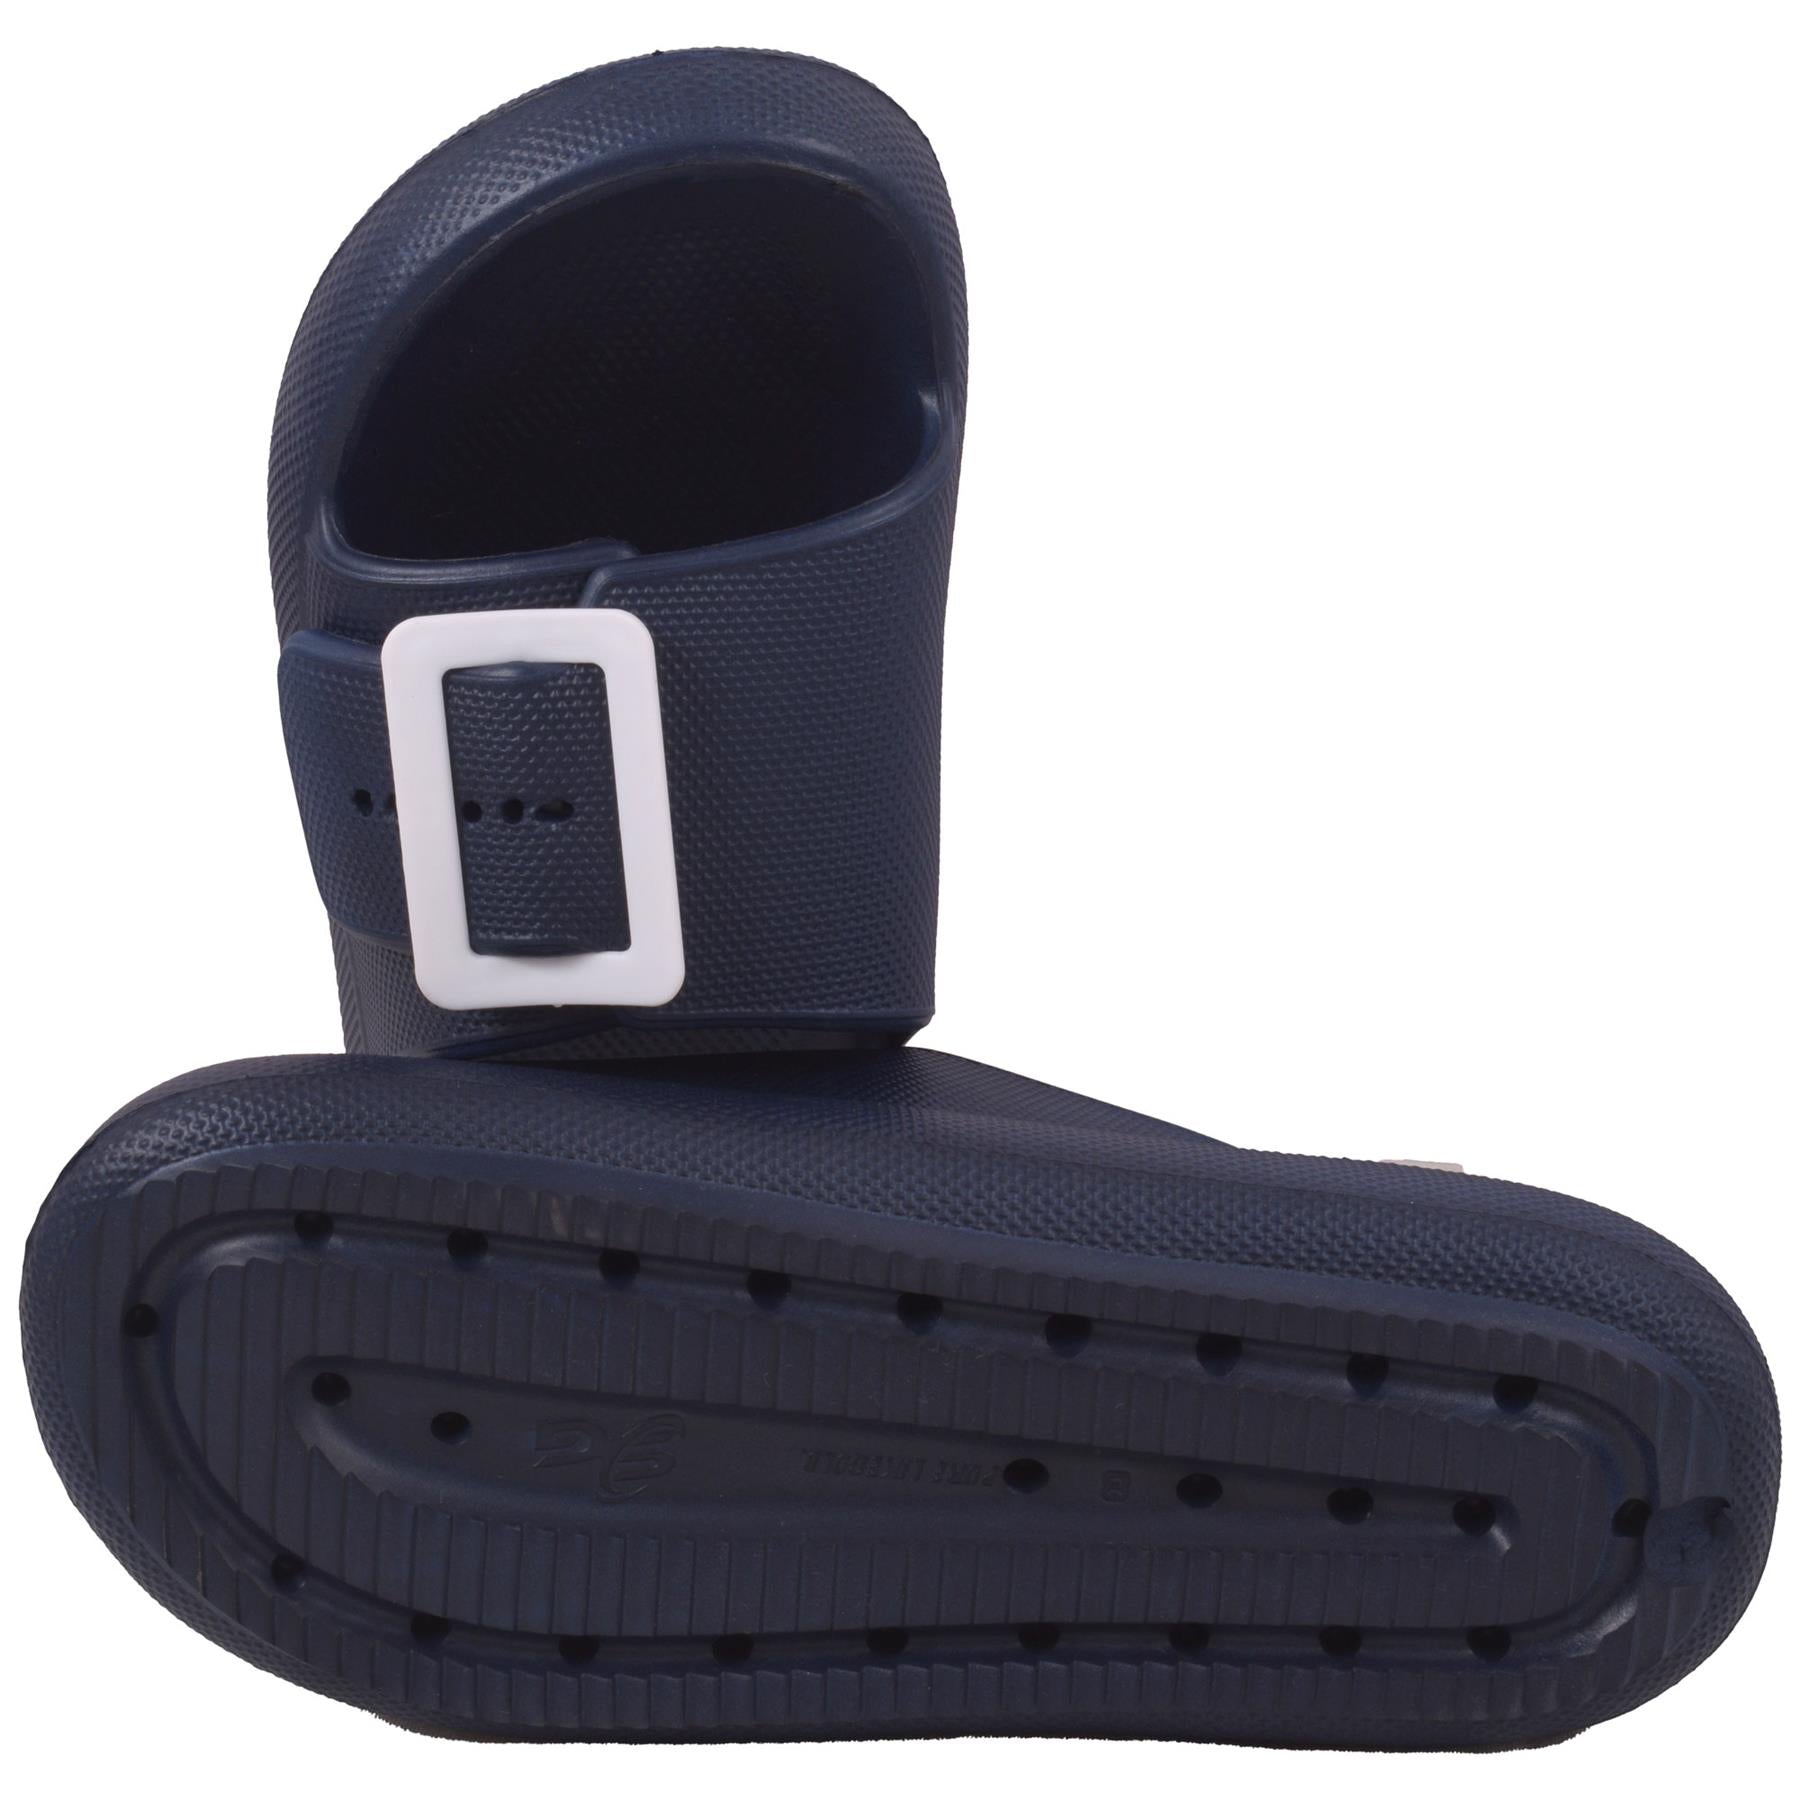 Women Cloud Sliders Soft Slide Sandals with Adjustable Buckle Open Toe Slippers